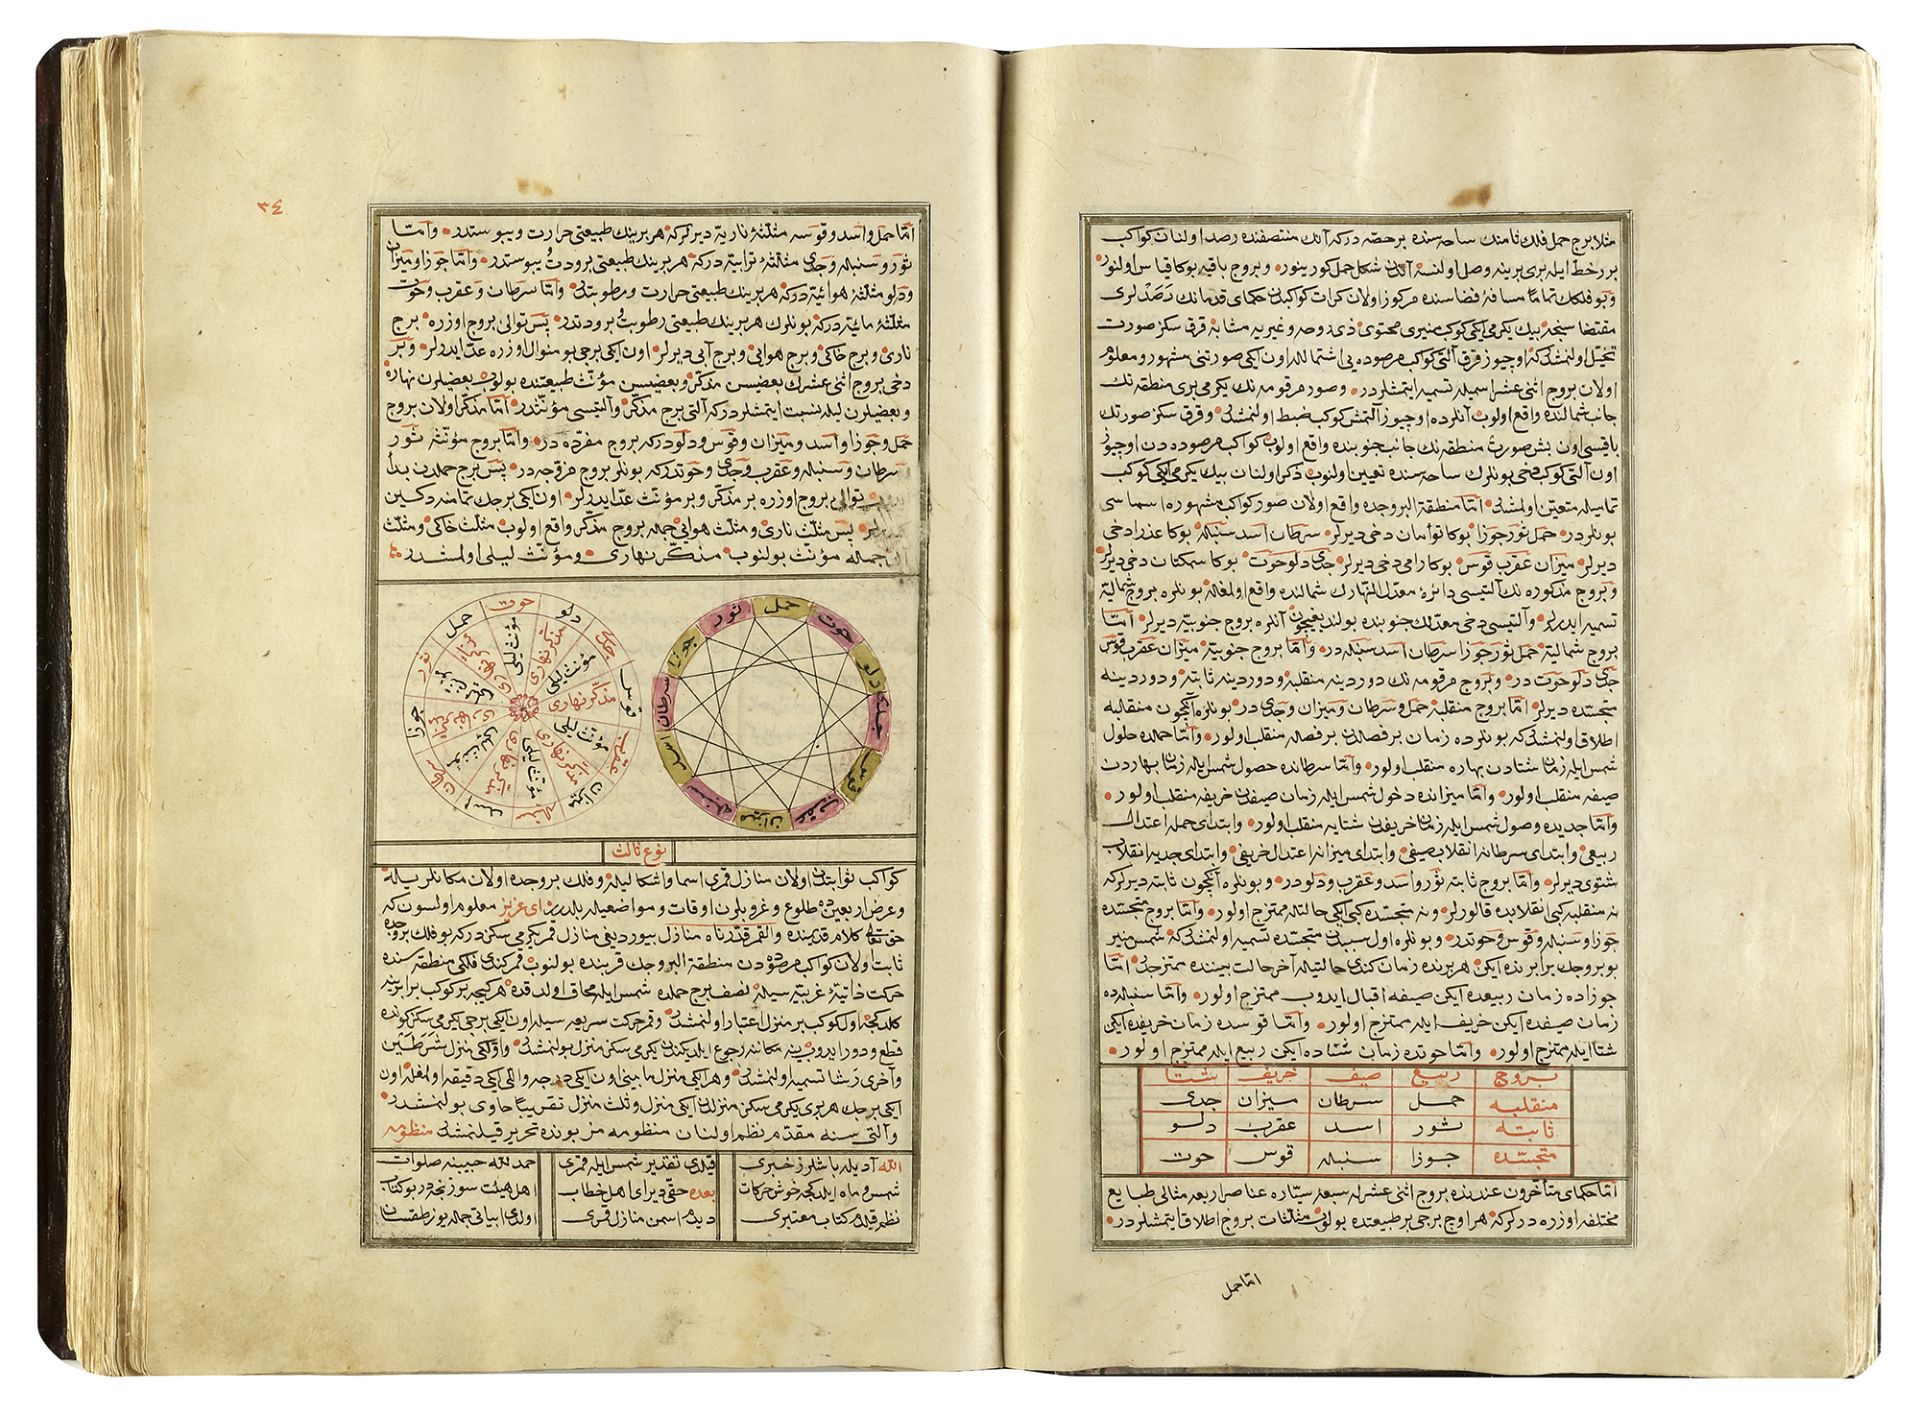 MARIFETNAME, IBRAHIM HAKKI, COPIED BY SAE'D ALLAH BIN ALI BIN AHMED, TURKEY, 1221 AH/1806 AD - Image 5 of 58